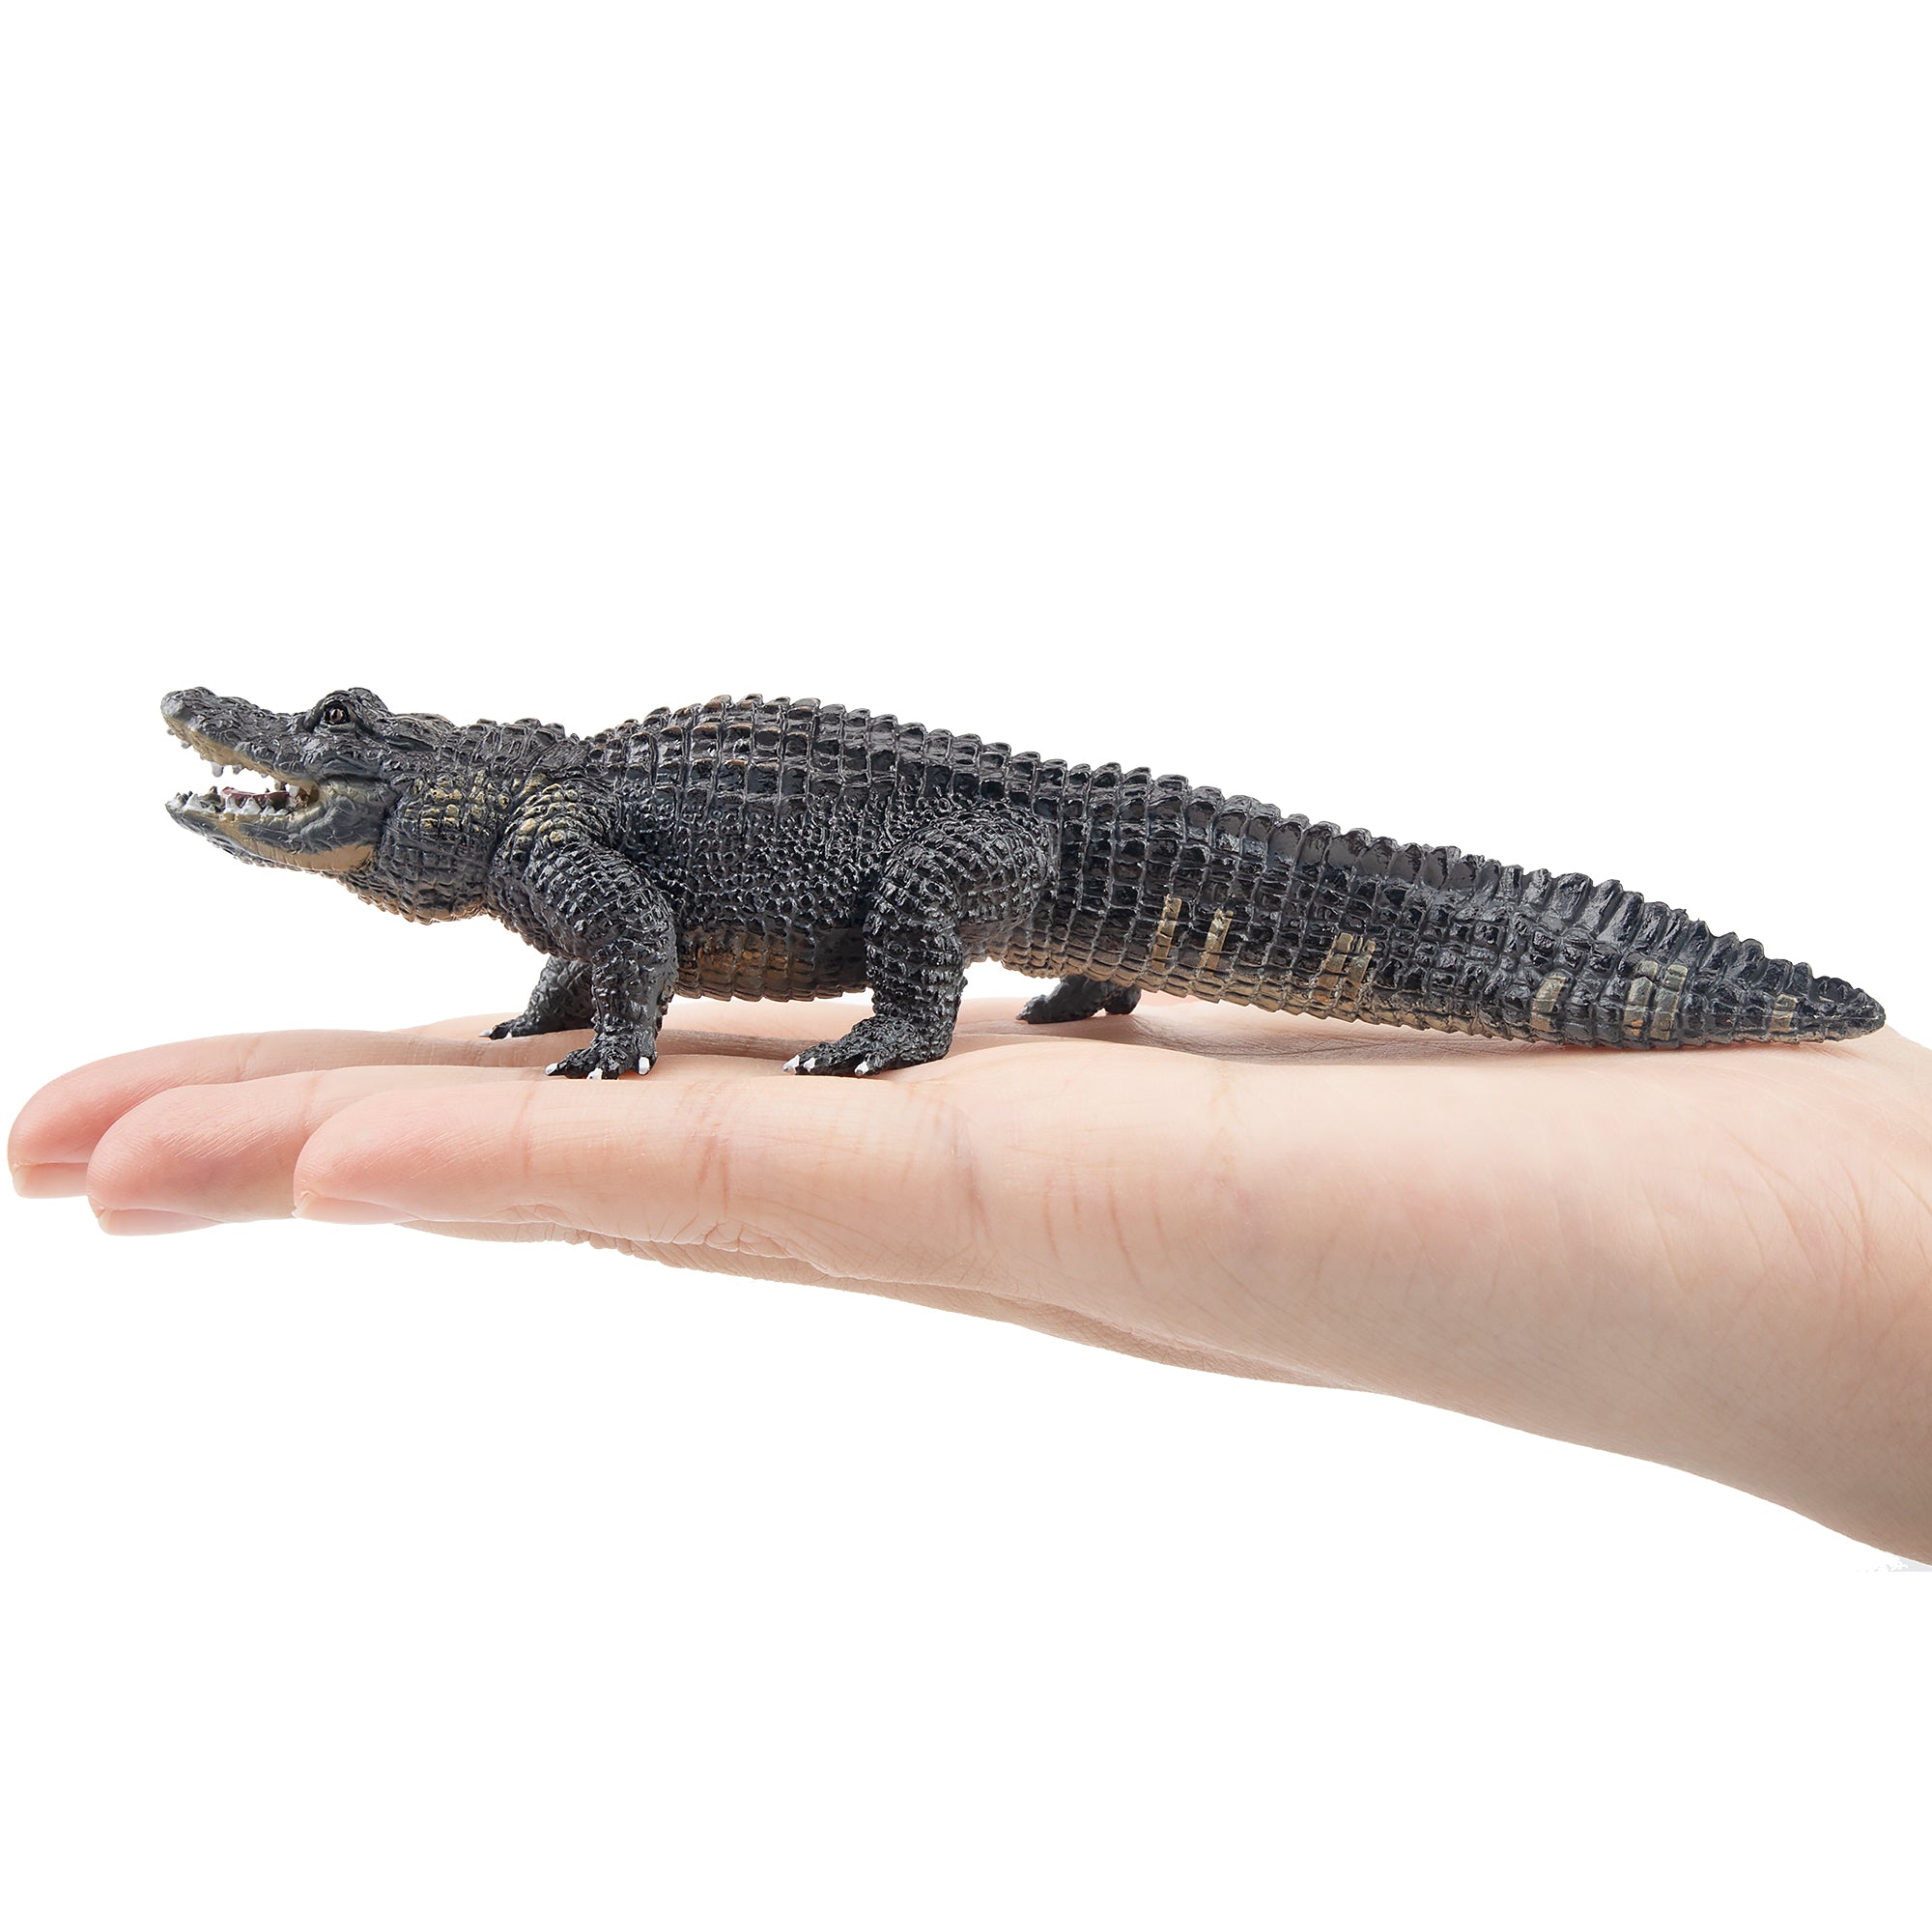 Toymany Alligator Figurine Toy-on hand